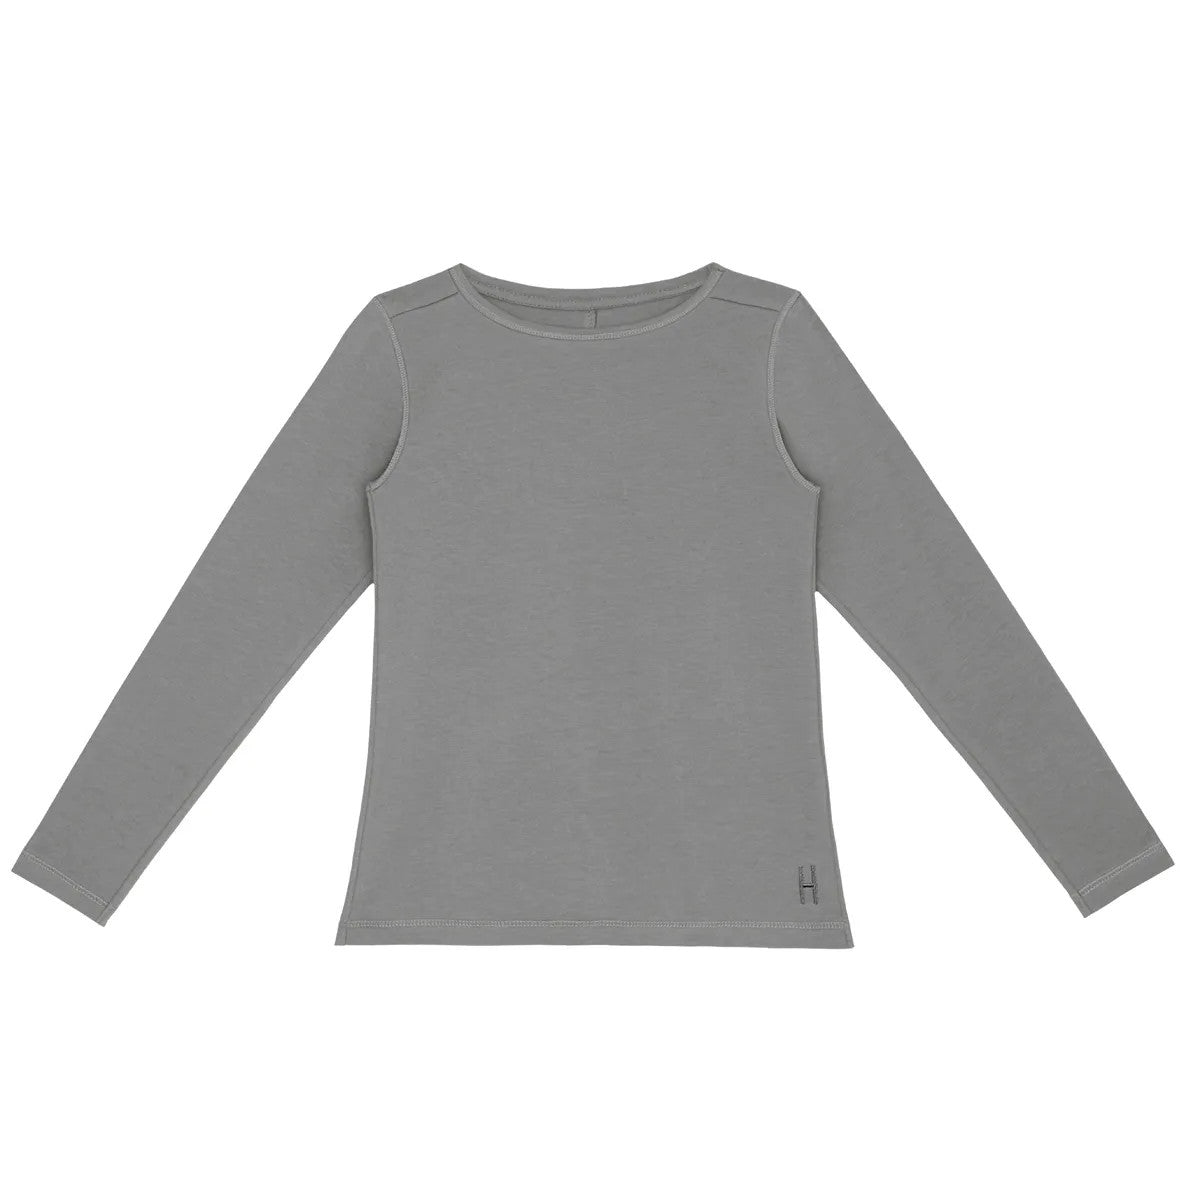 Little Hedonist trans-seasonal unisex organic cotton longsleeve shirt in grey